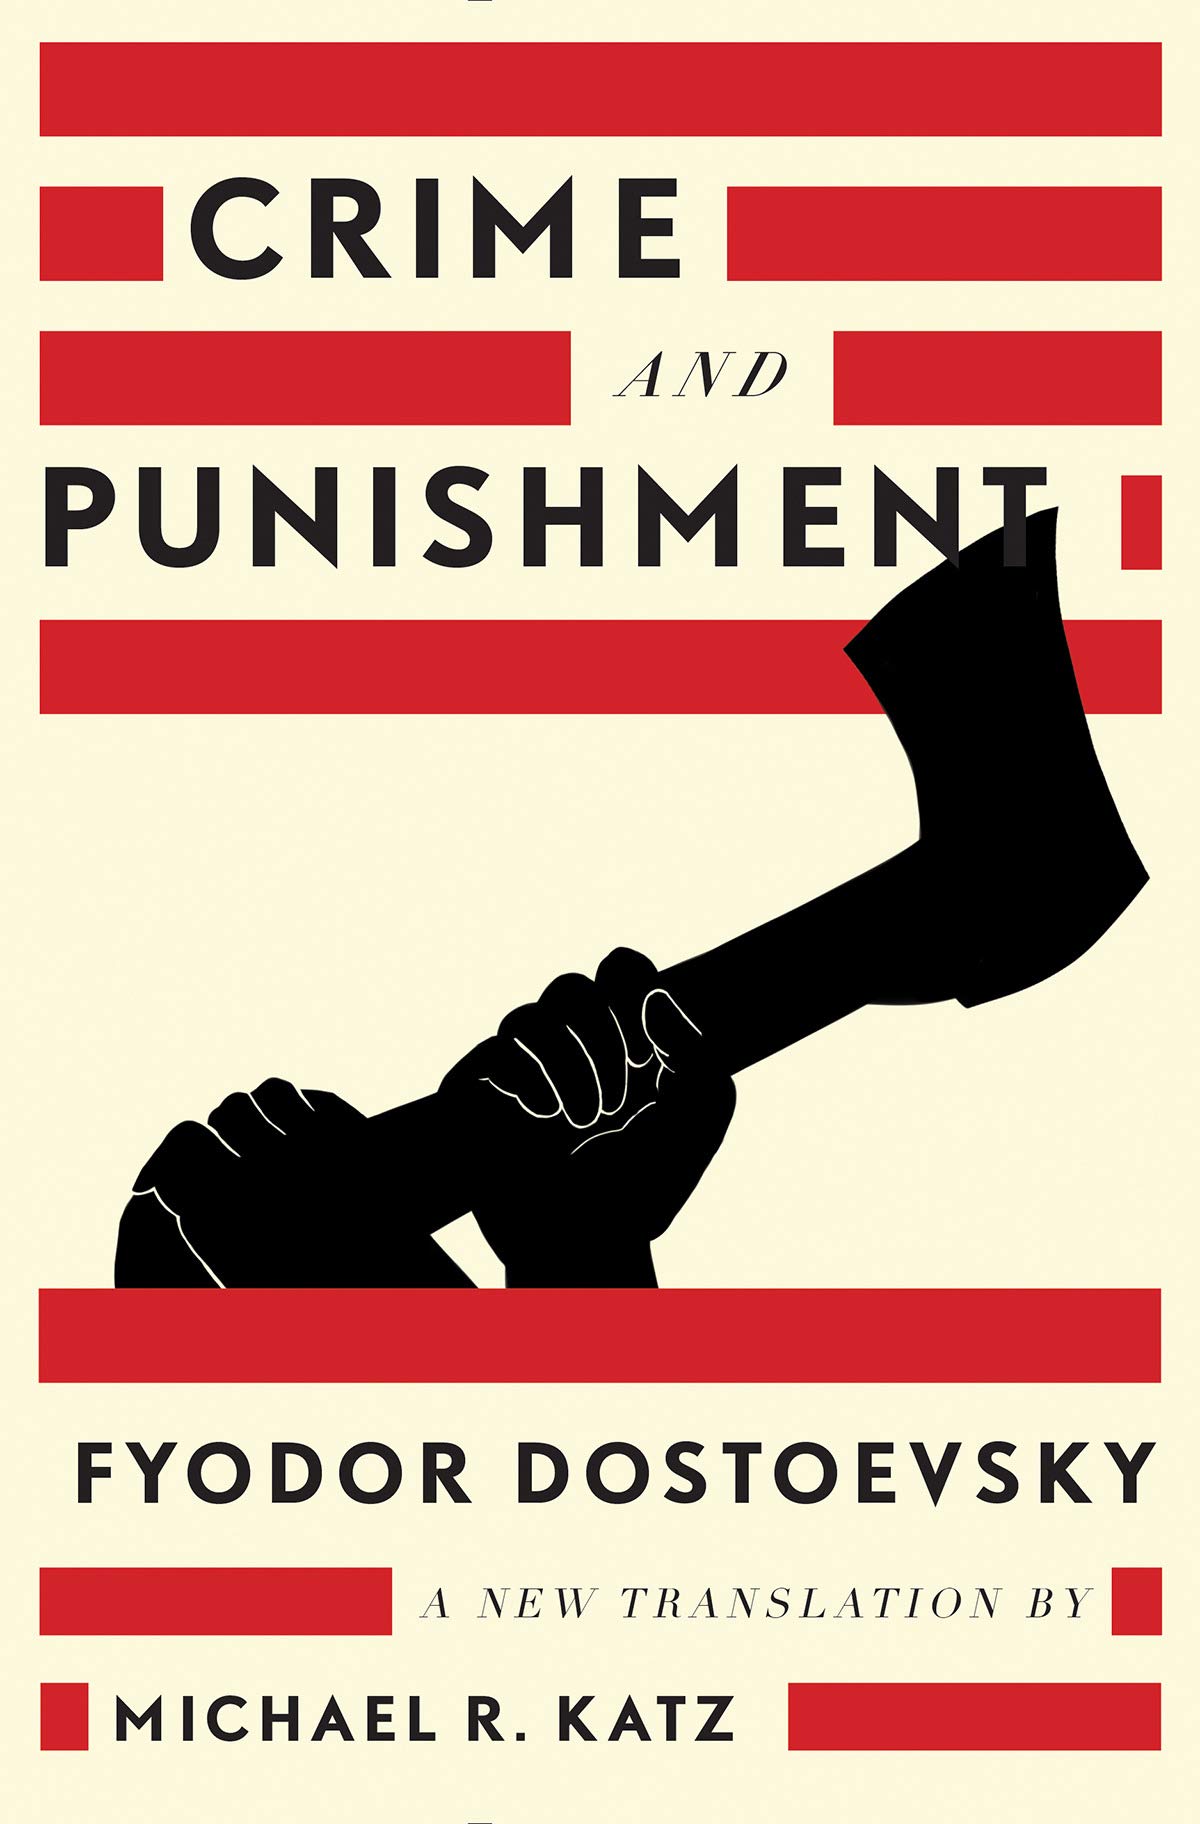 gp essays on crime and punishment